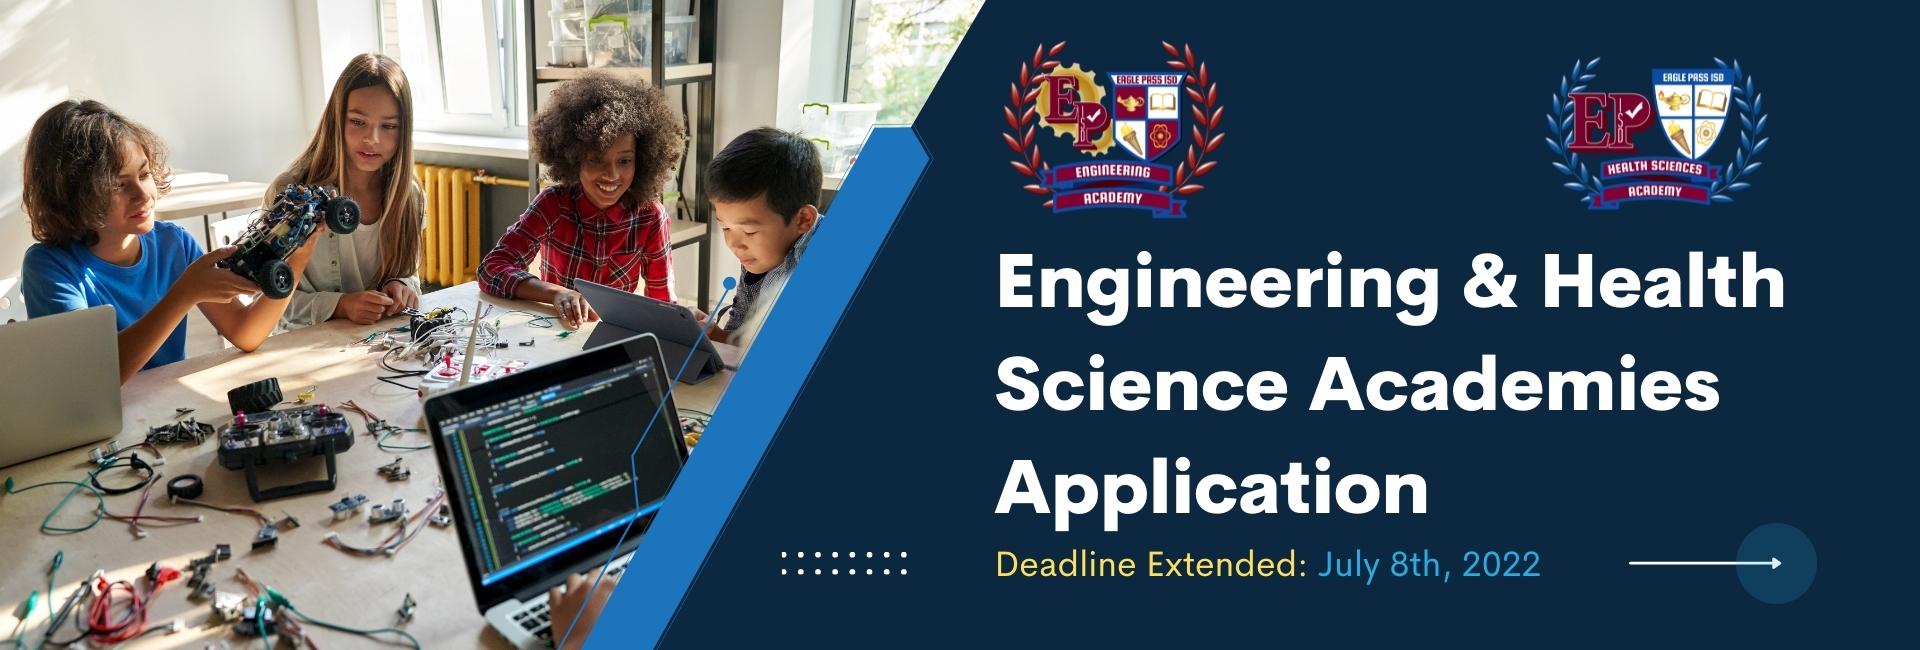 Engineering & Health Science Academies Application banner